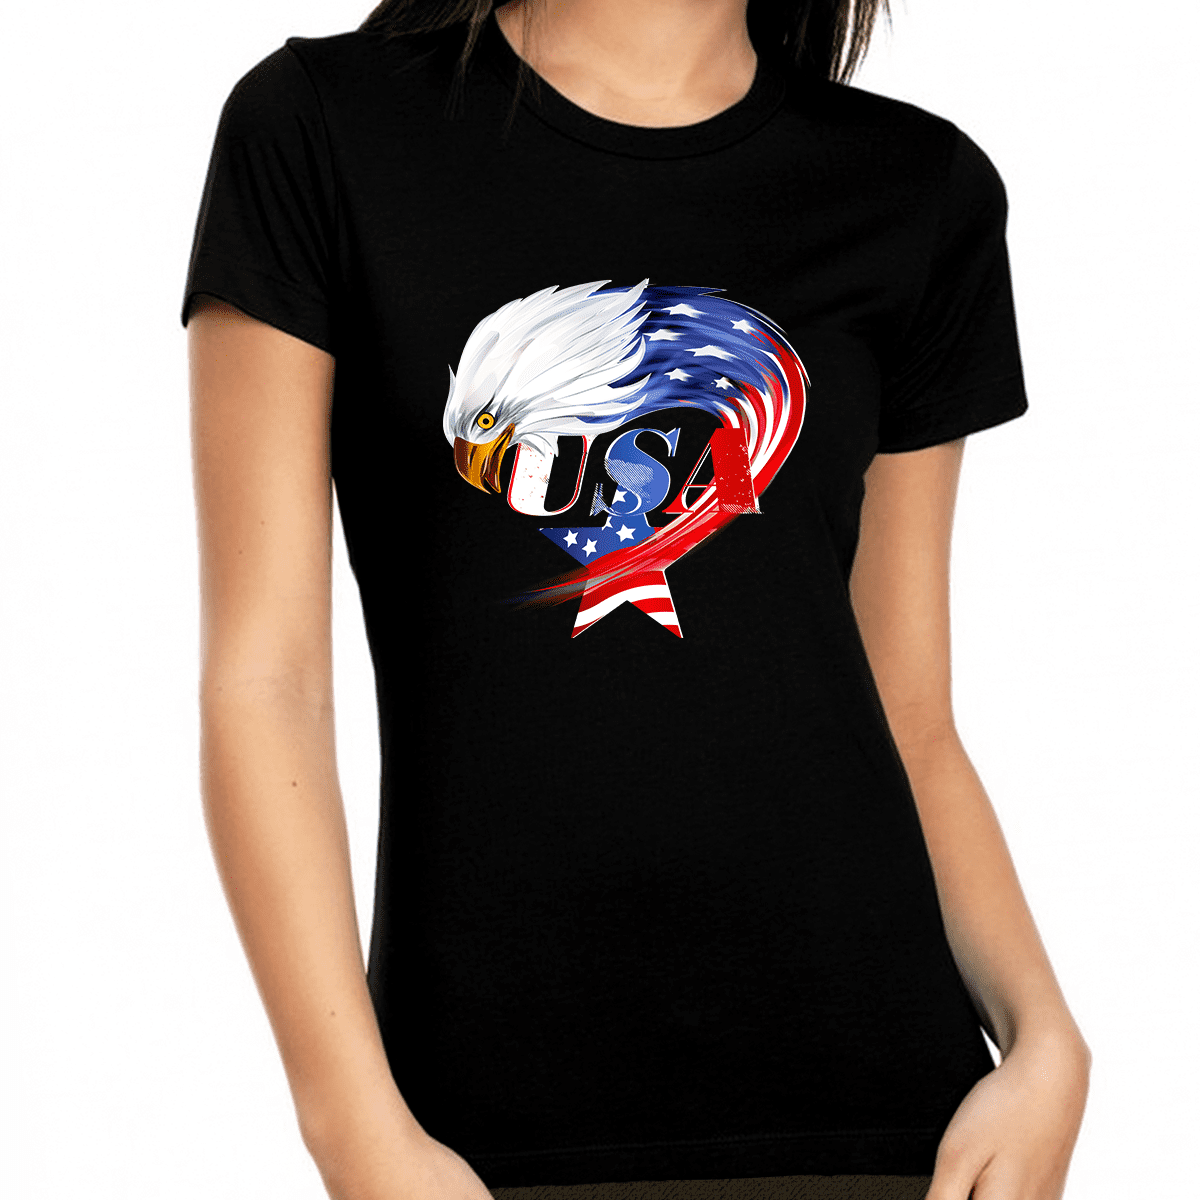 American Bald Eagle USA Wings Women's Tank Top US Flag Patriotic Tee